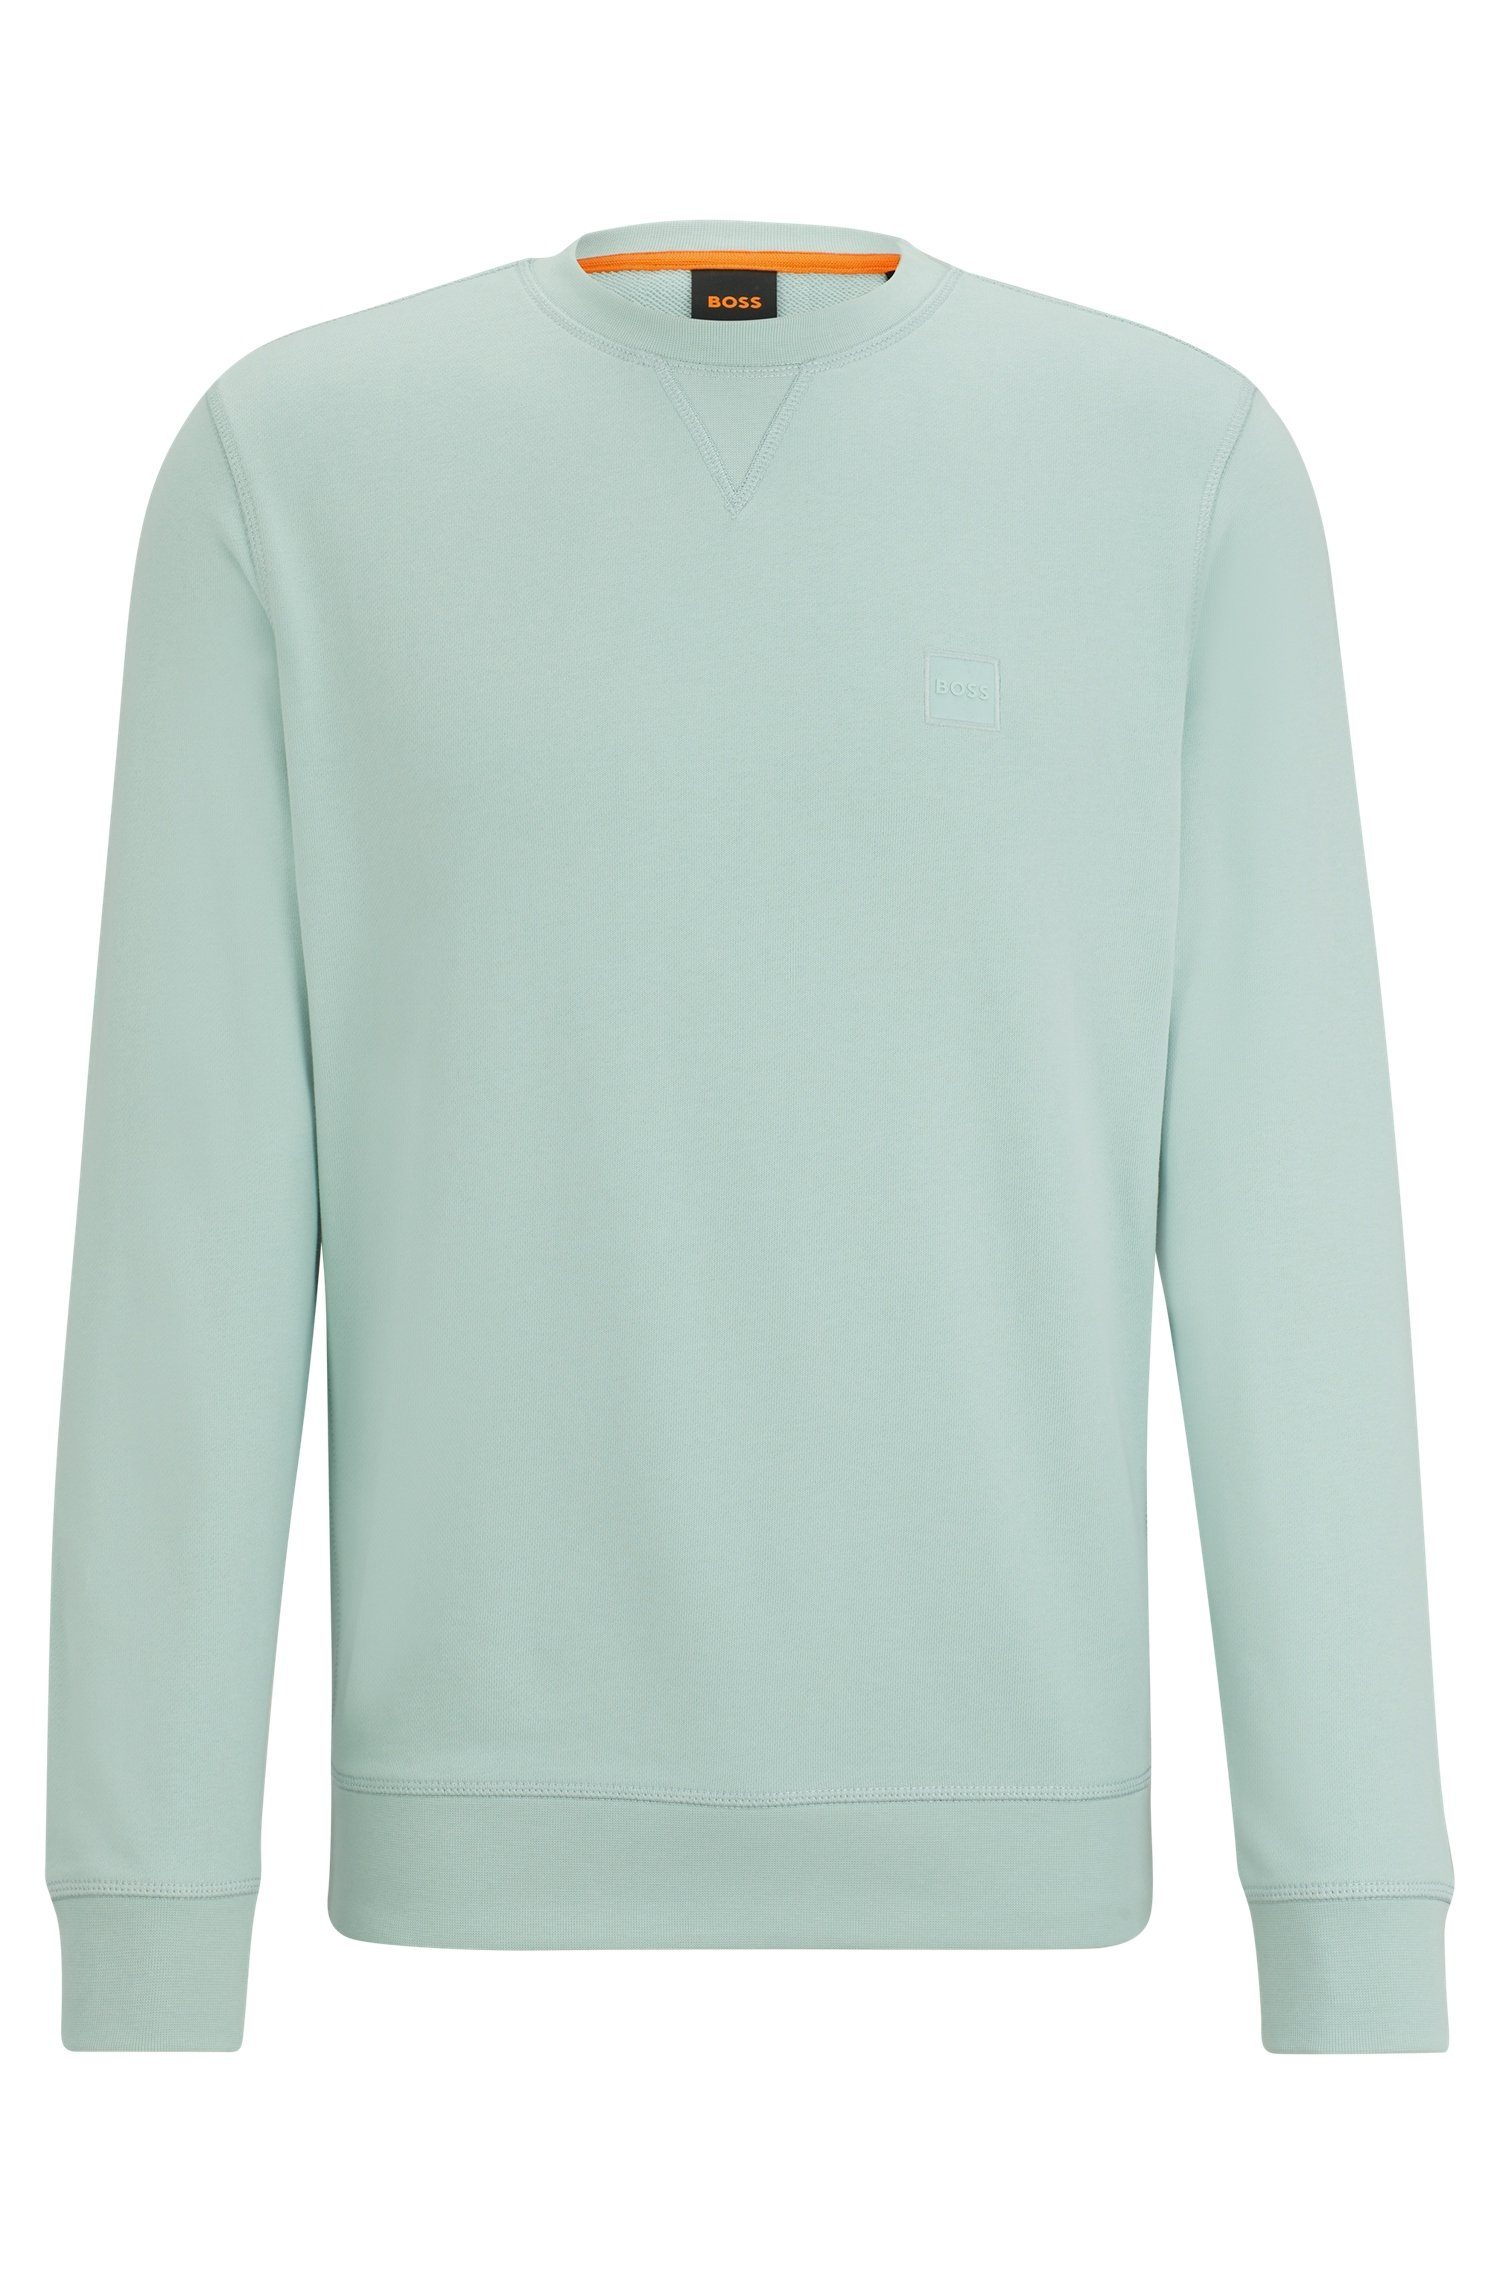 Sweatshirt 446 ORANGE Turquoise/Aqua BOSS Westart Tragekomfort hoher